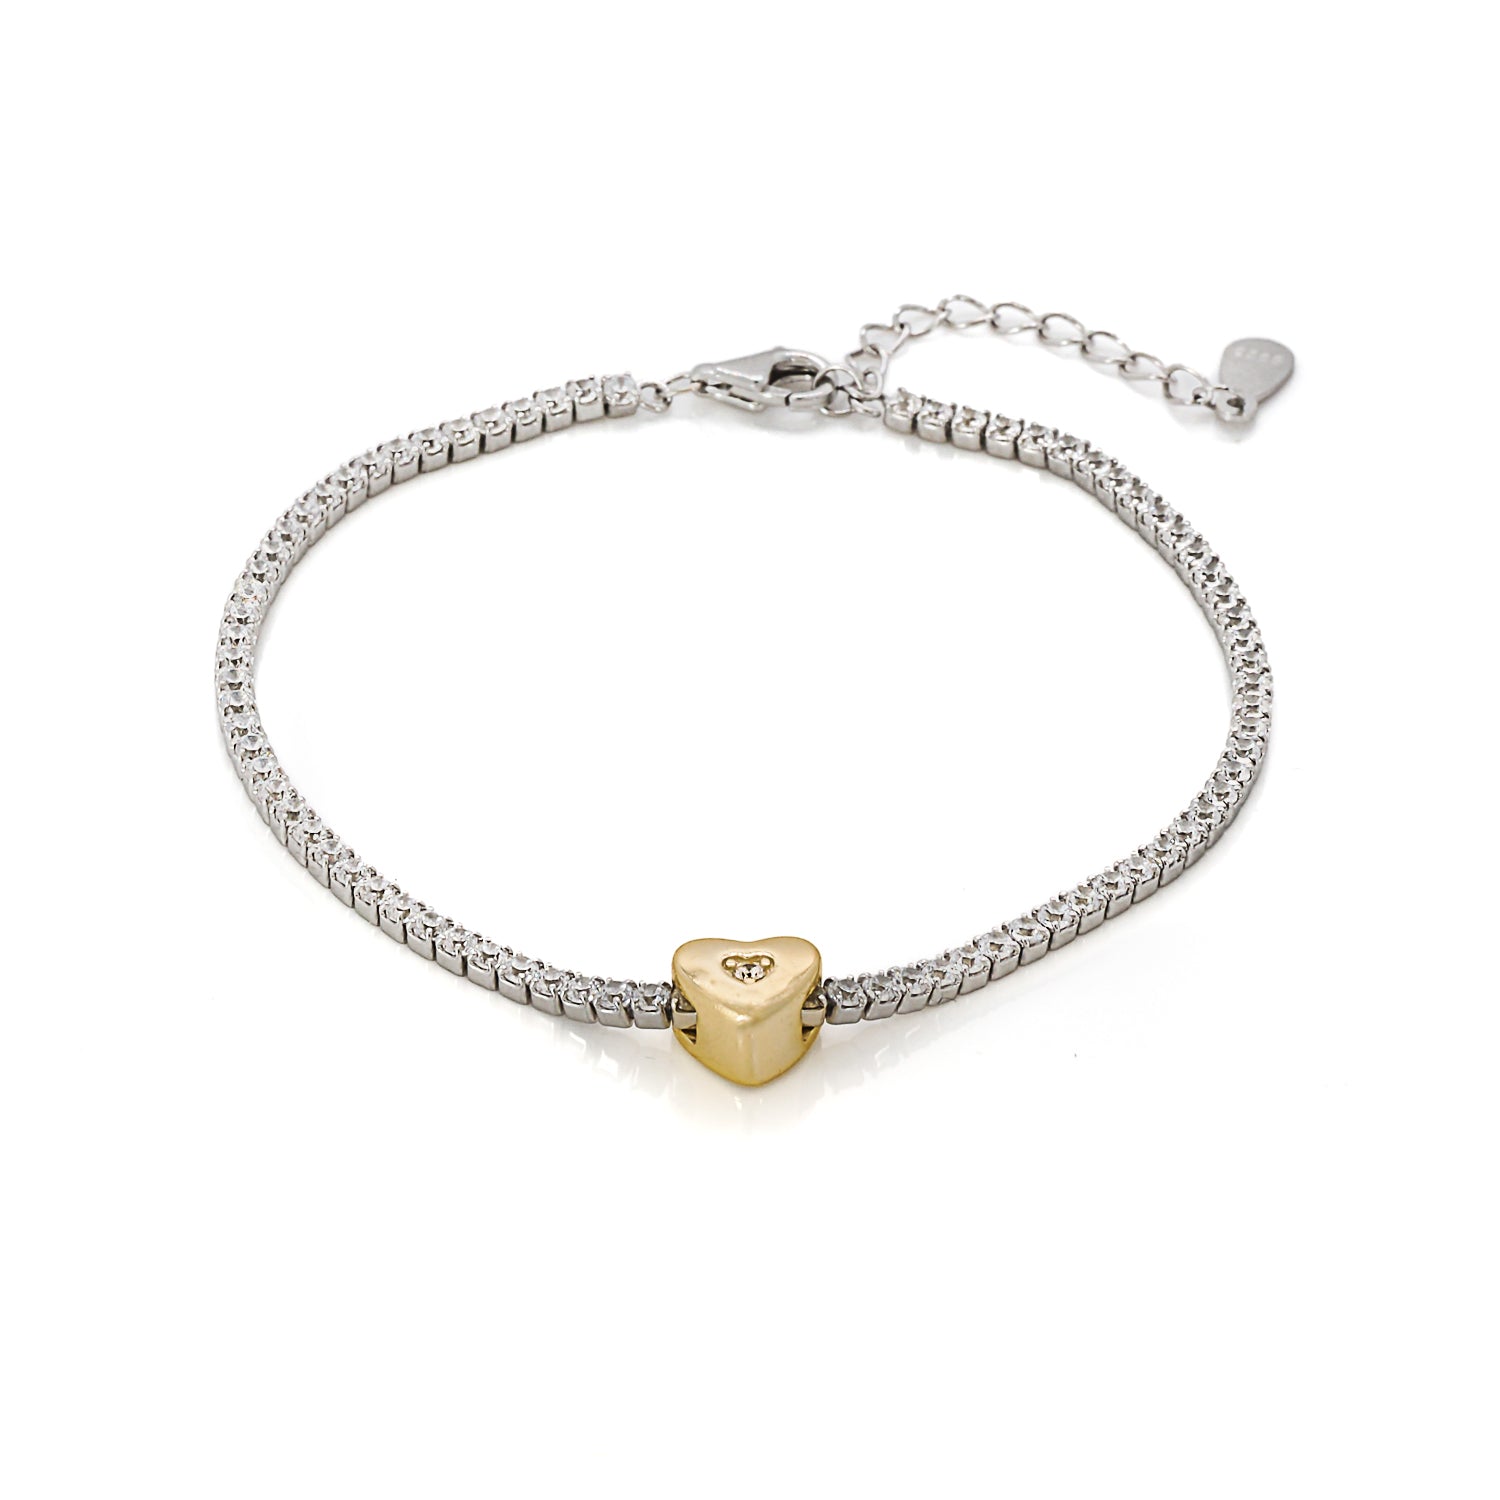 Gold Heart Diamond Tennis Bracelet: Elegance and sparkle.